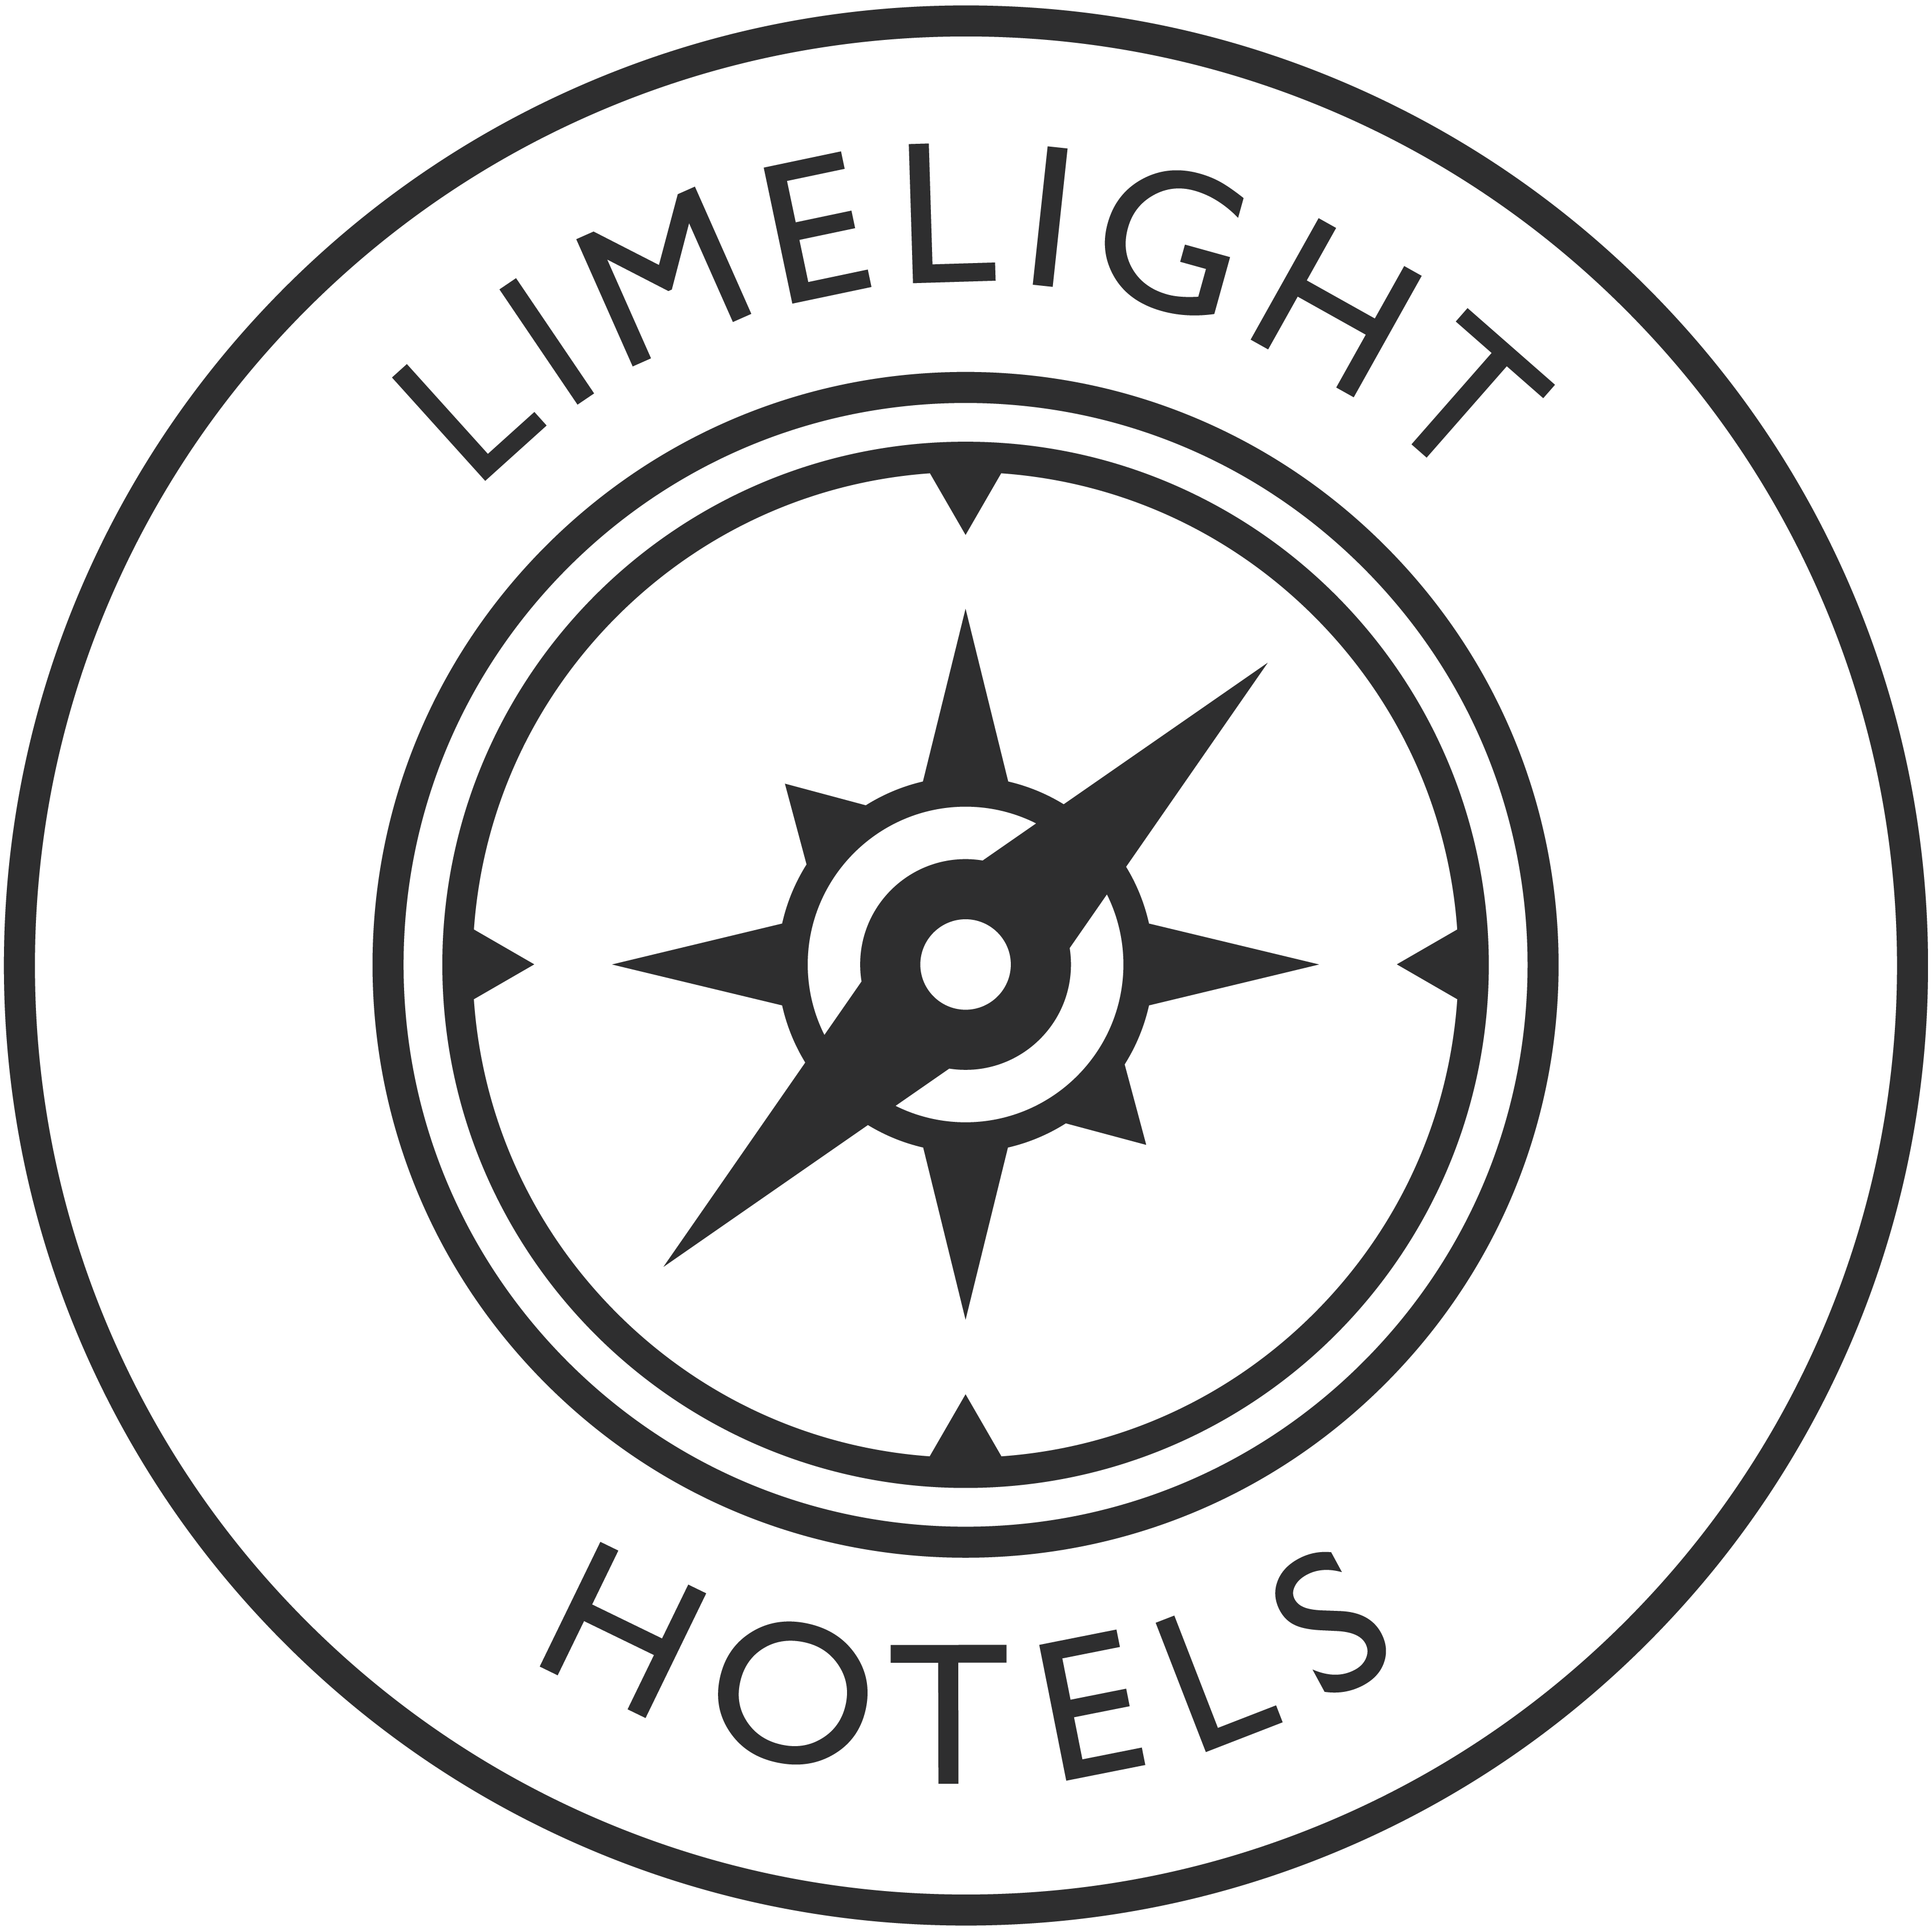 Limelight Hotels